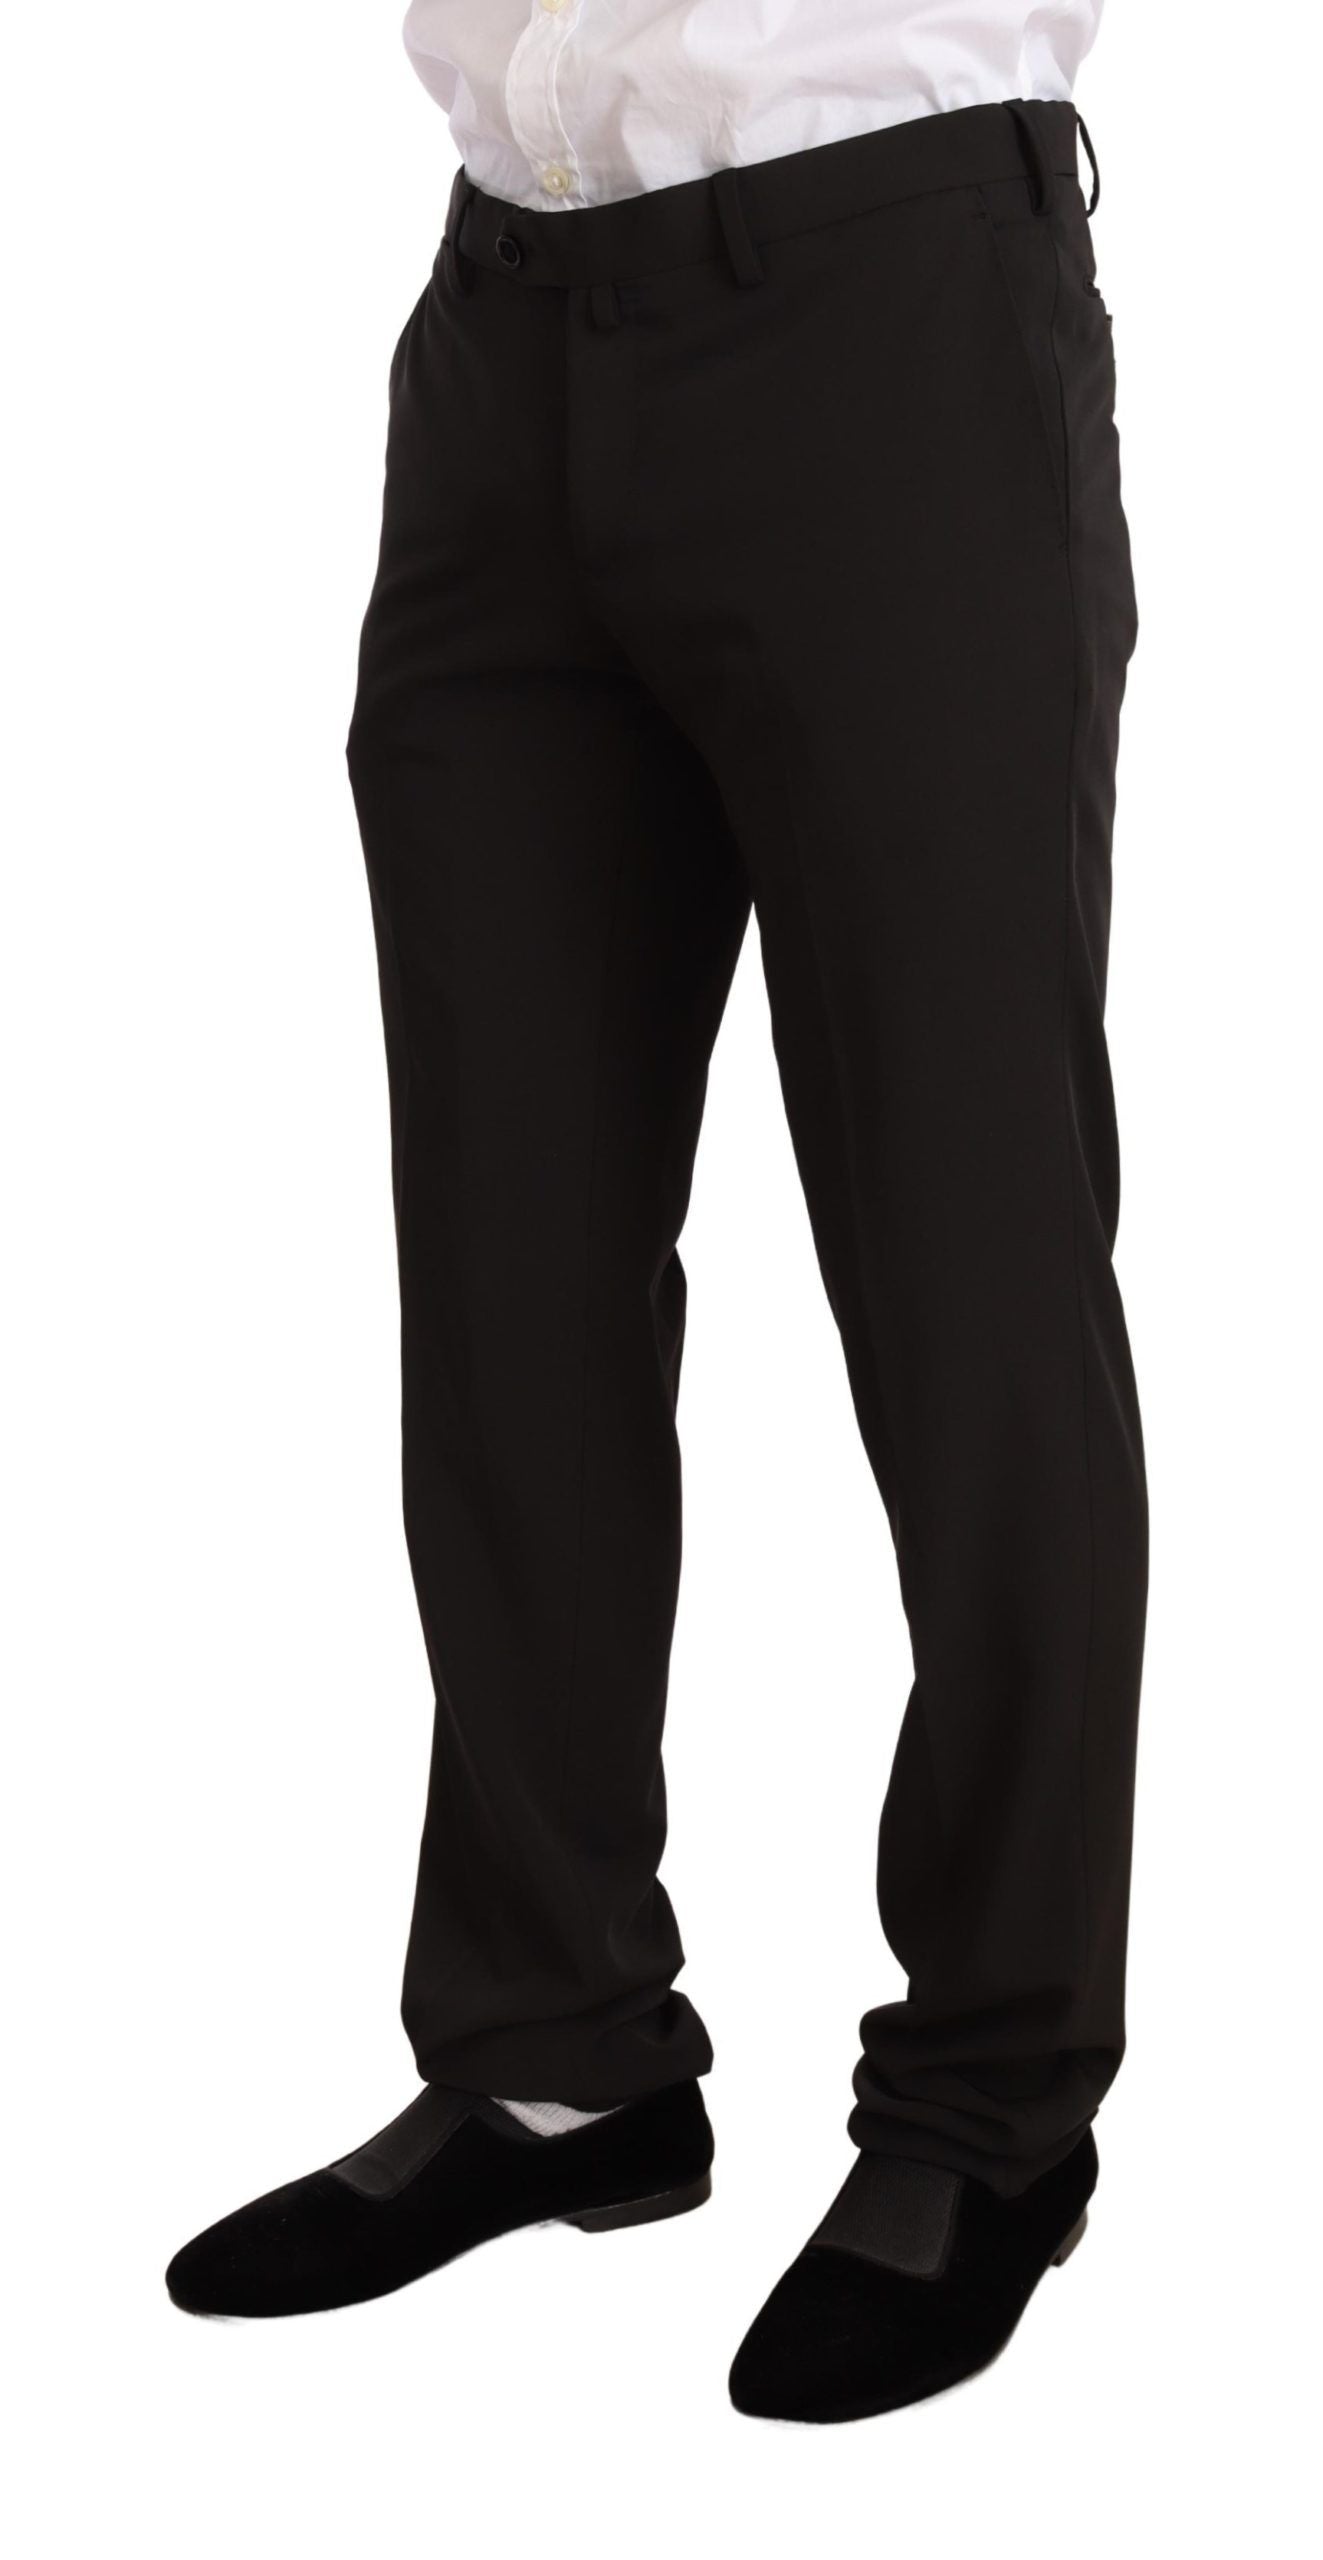 Domenico Tagliente Black Polyester Slim 2 Piece Set TAGLIENTE Suit